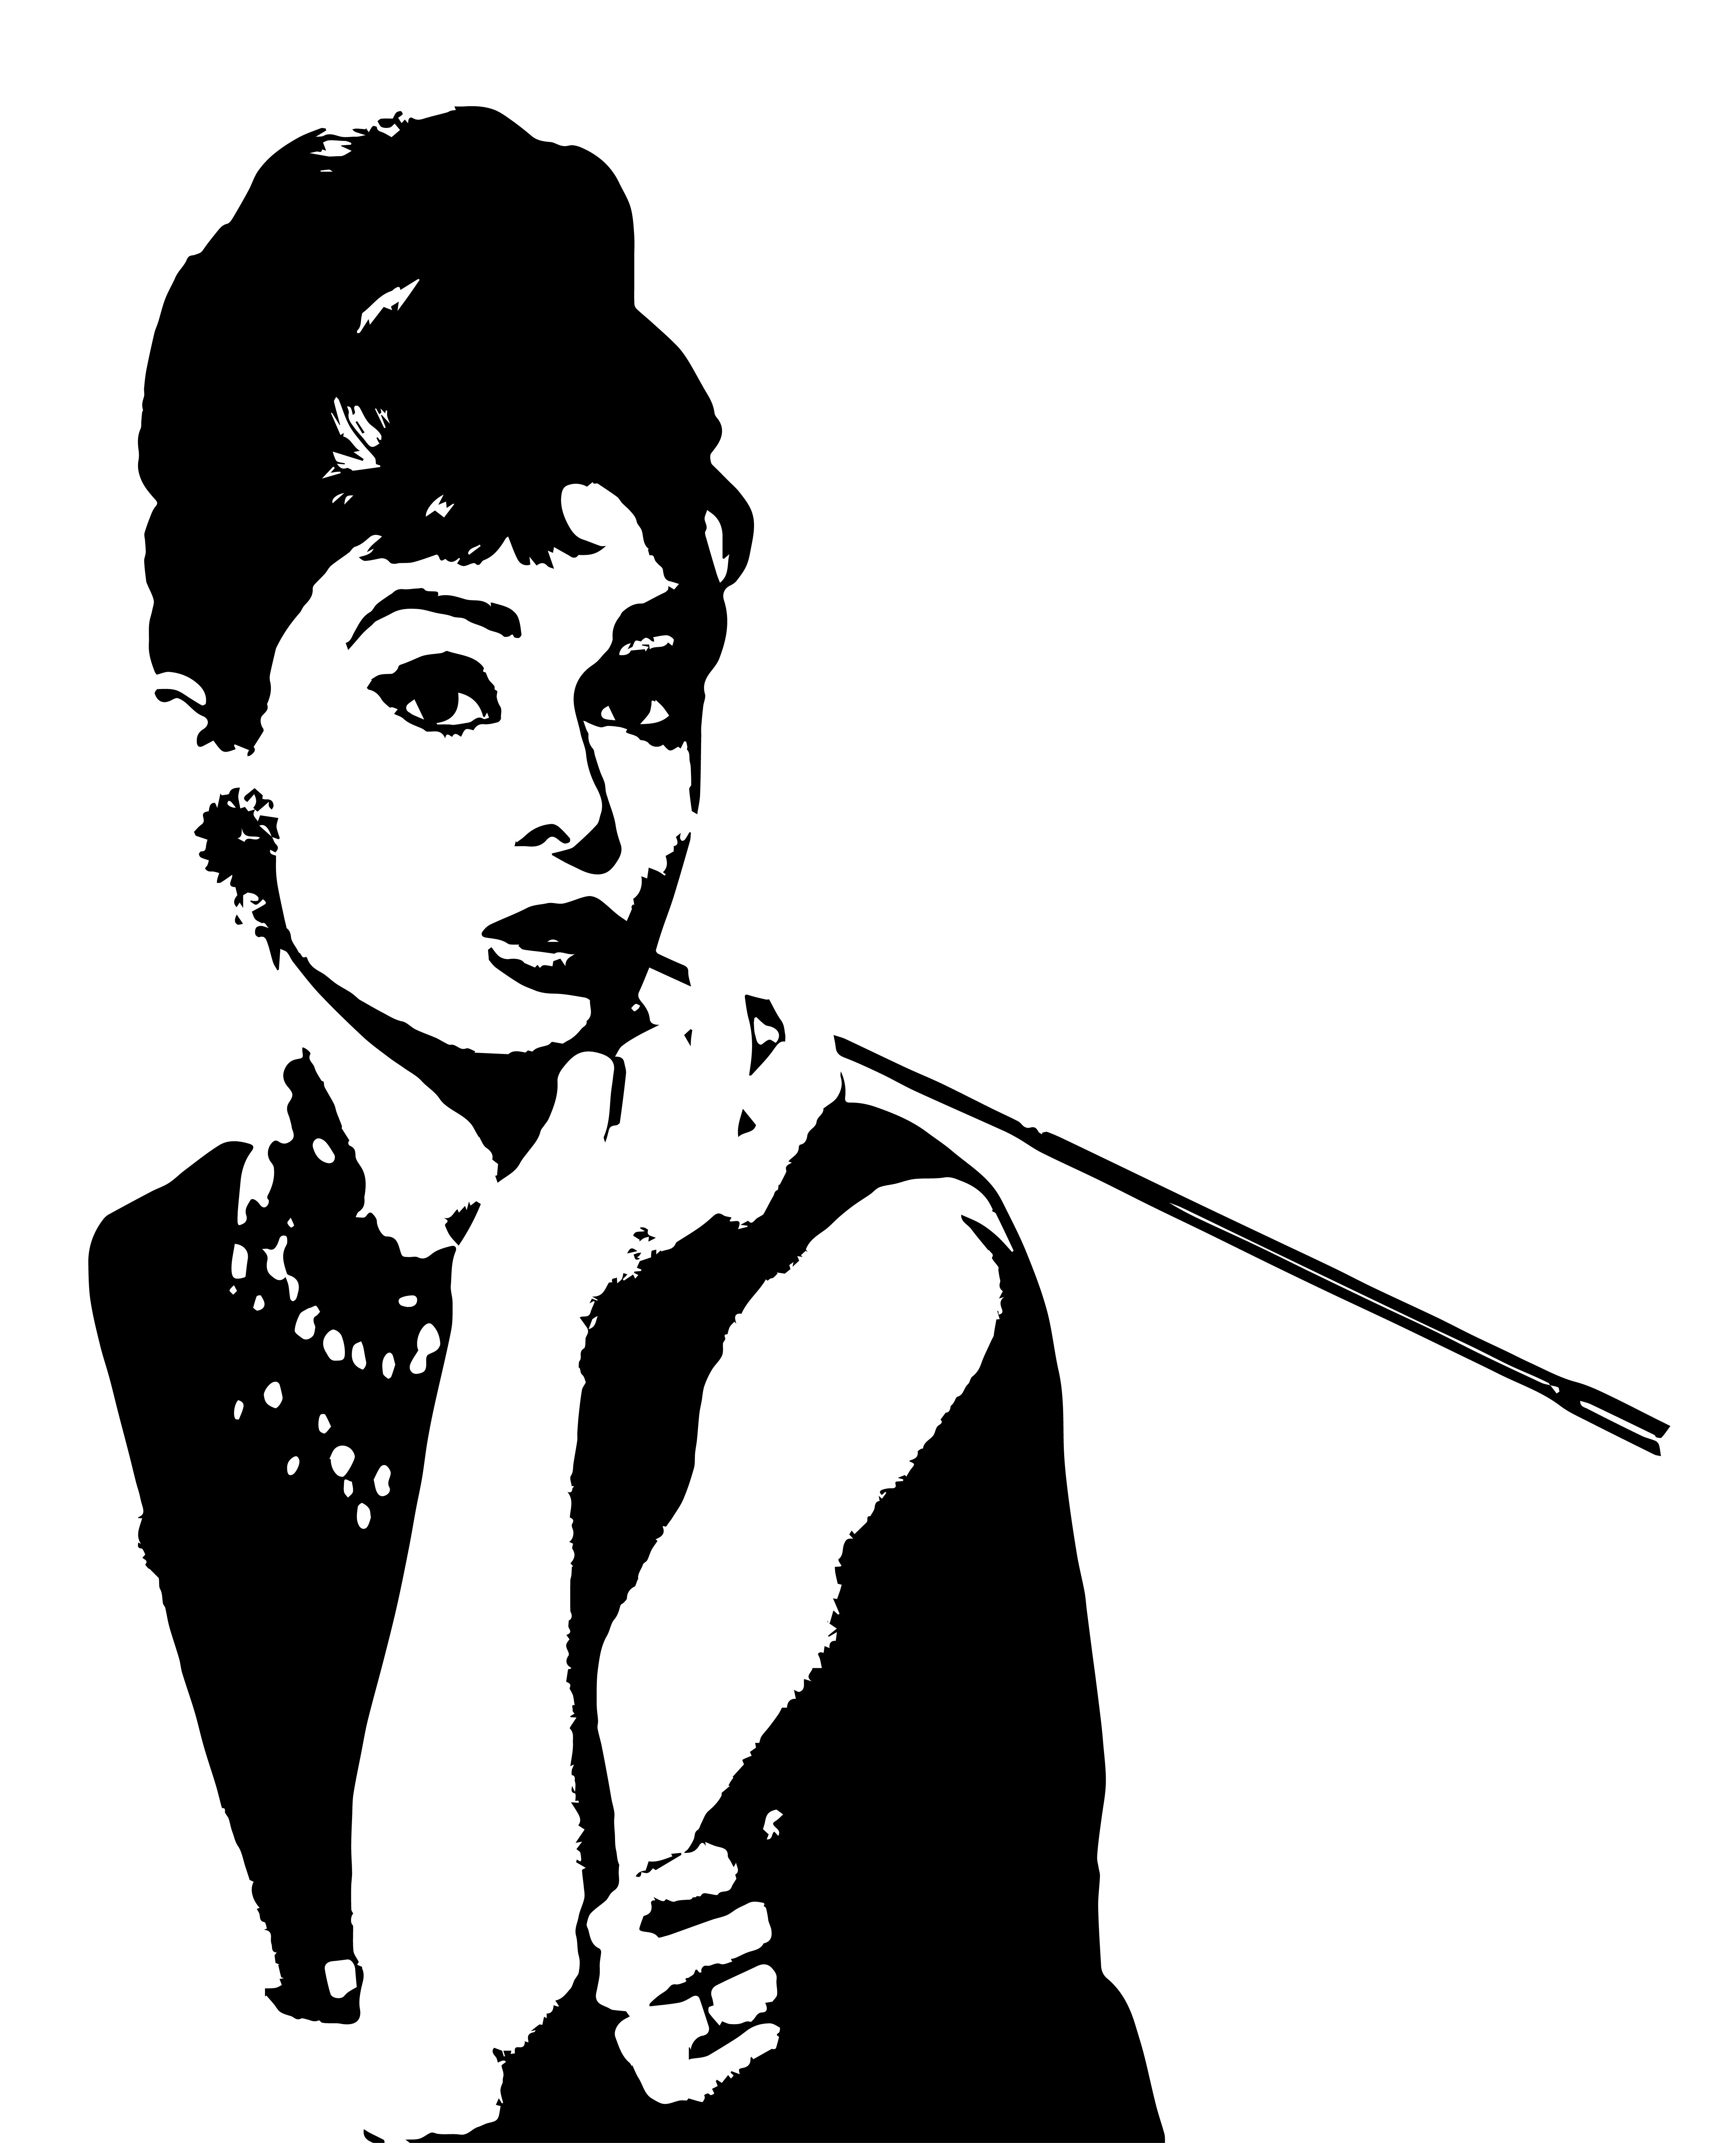 Free Audrey Hepburn Silhouette Images, Download Free Audrey Hepburn ...